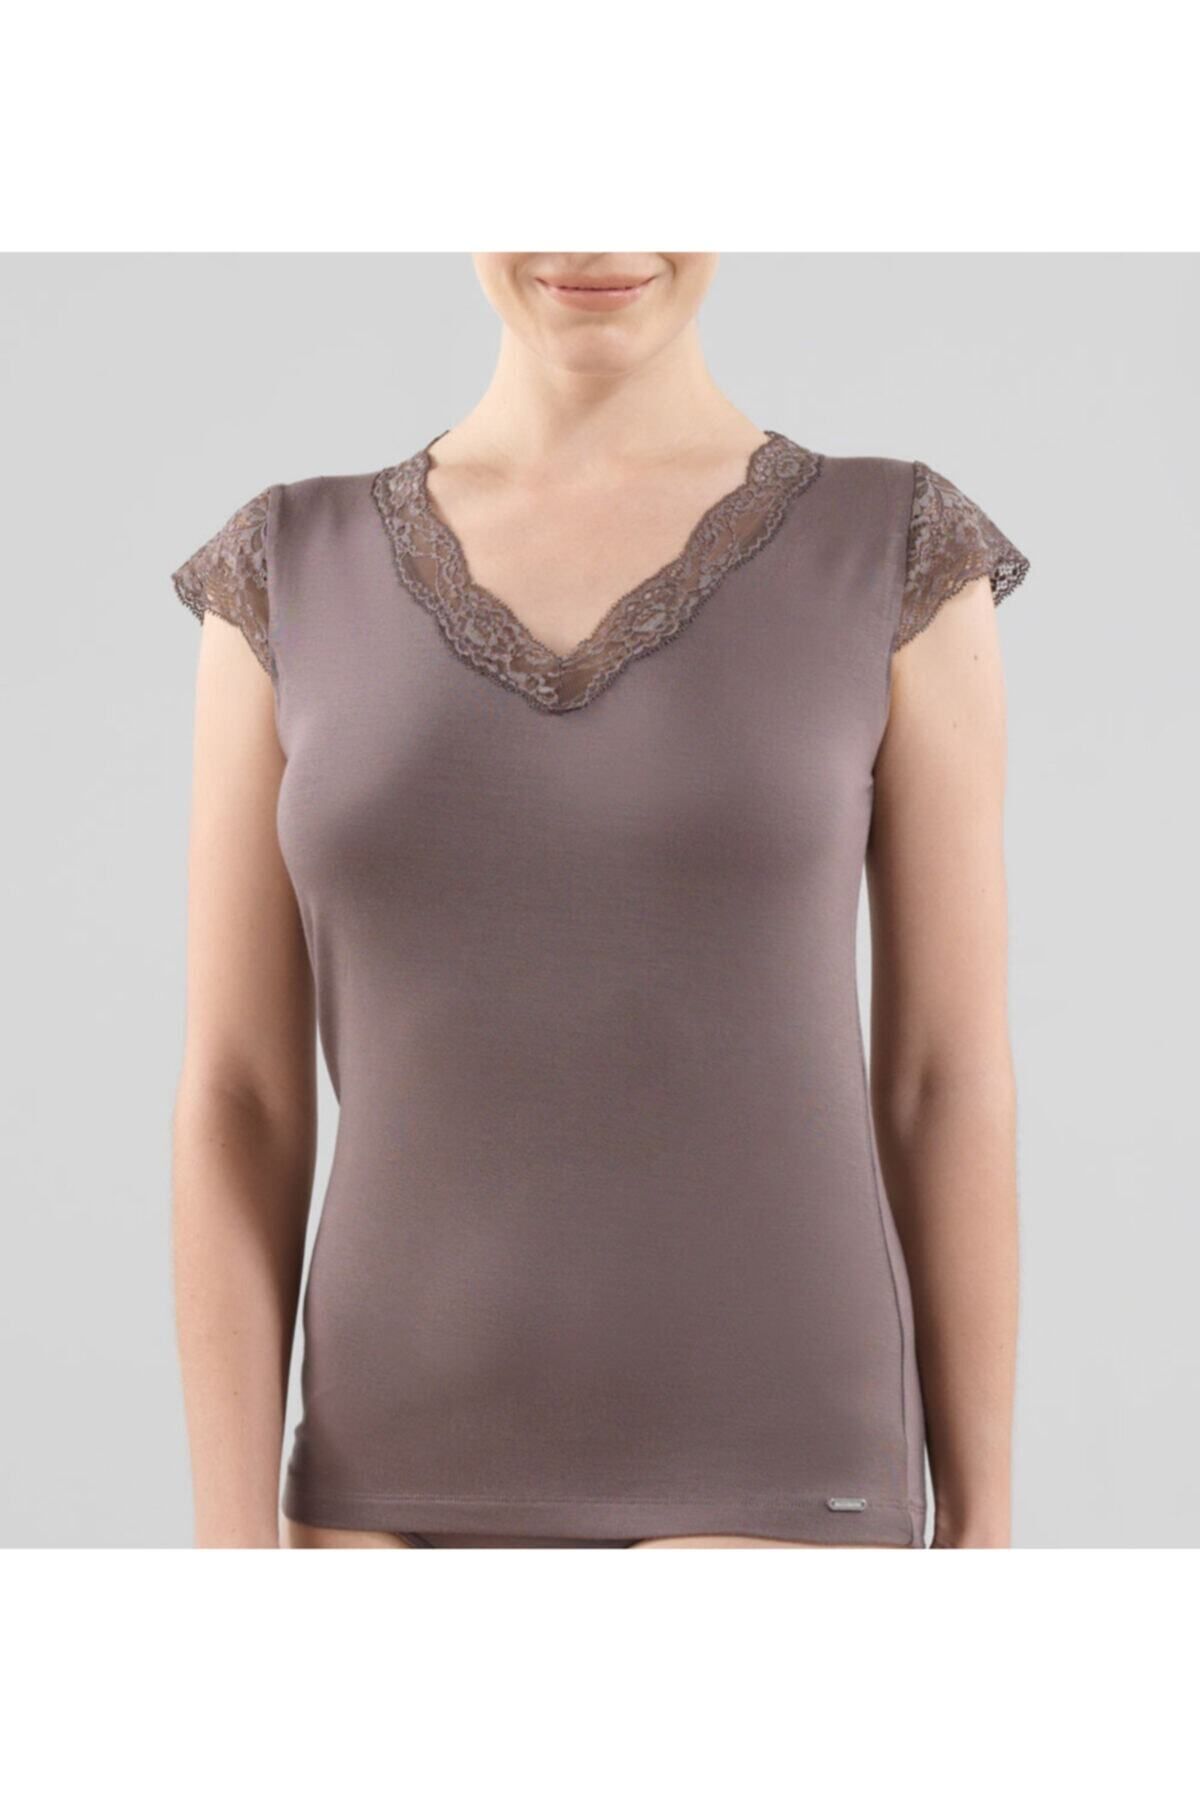 Blackspade Kadın T-shirt 1348 - Kahverengi